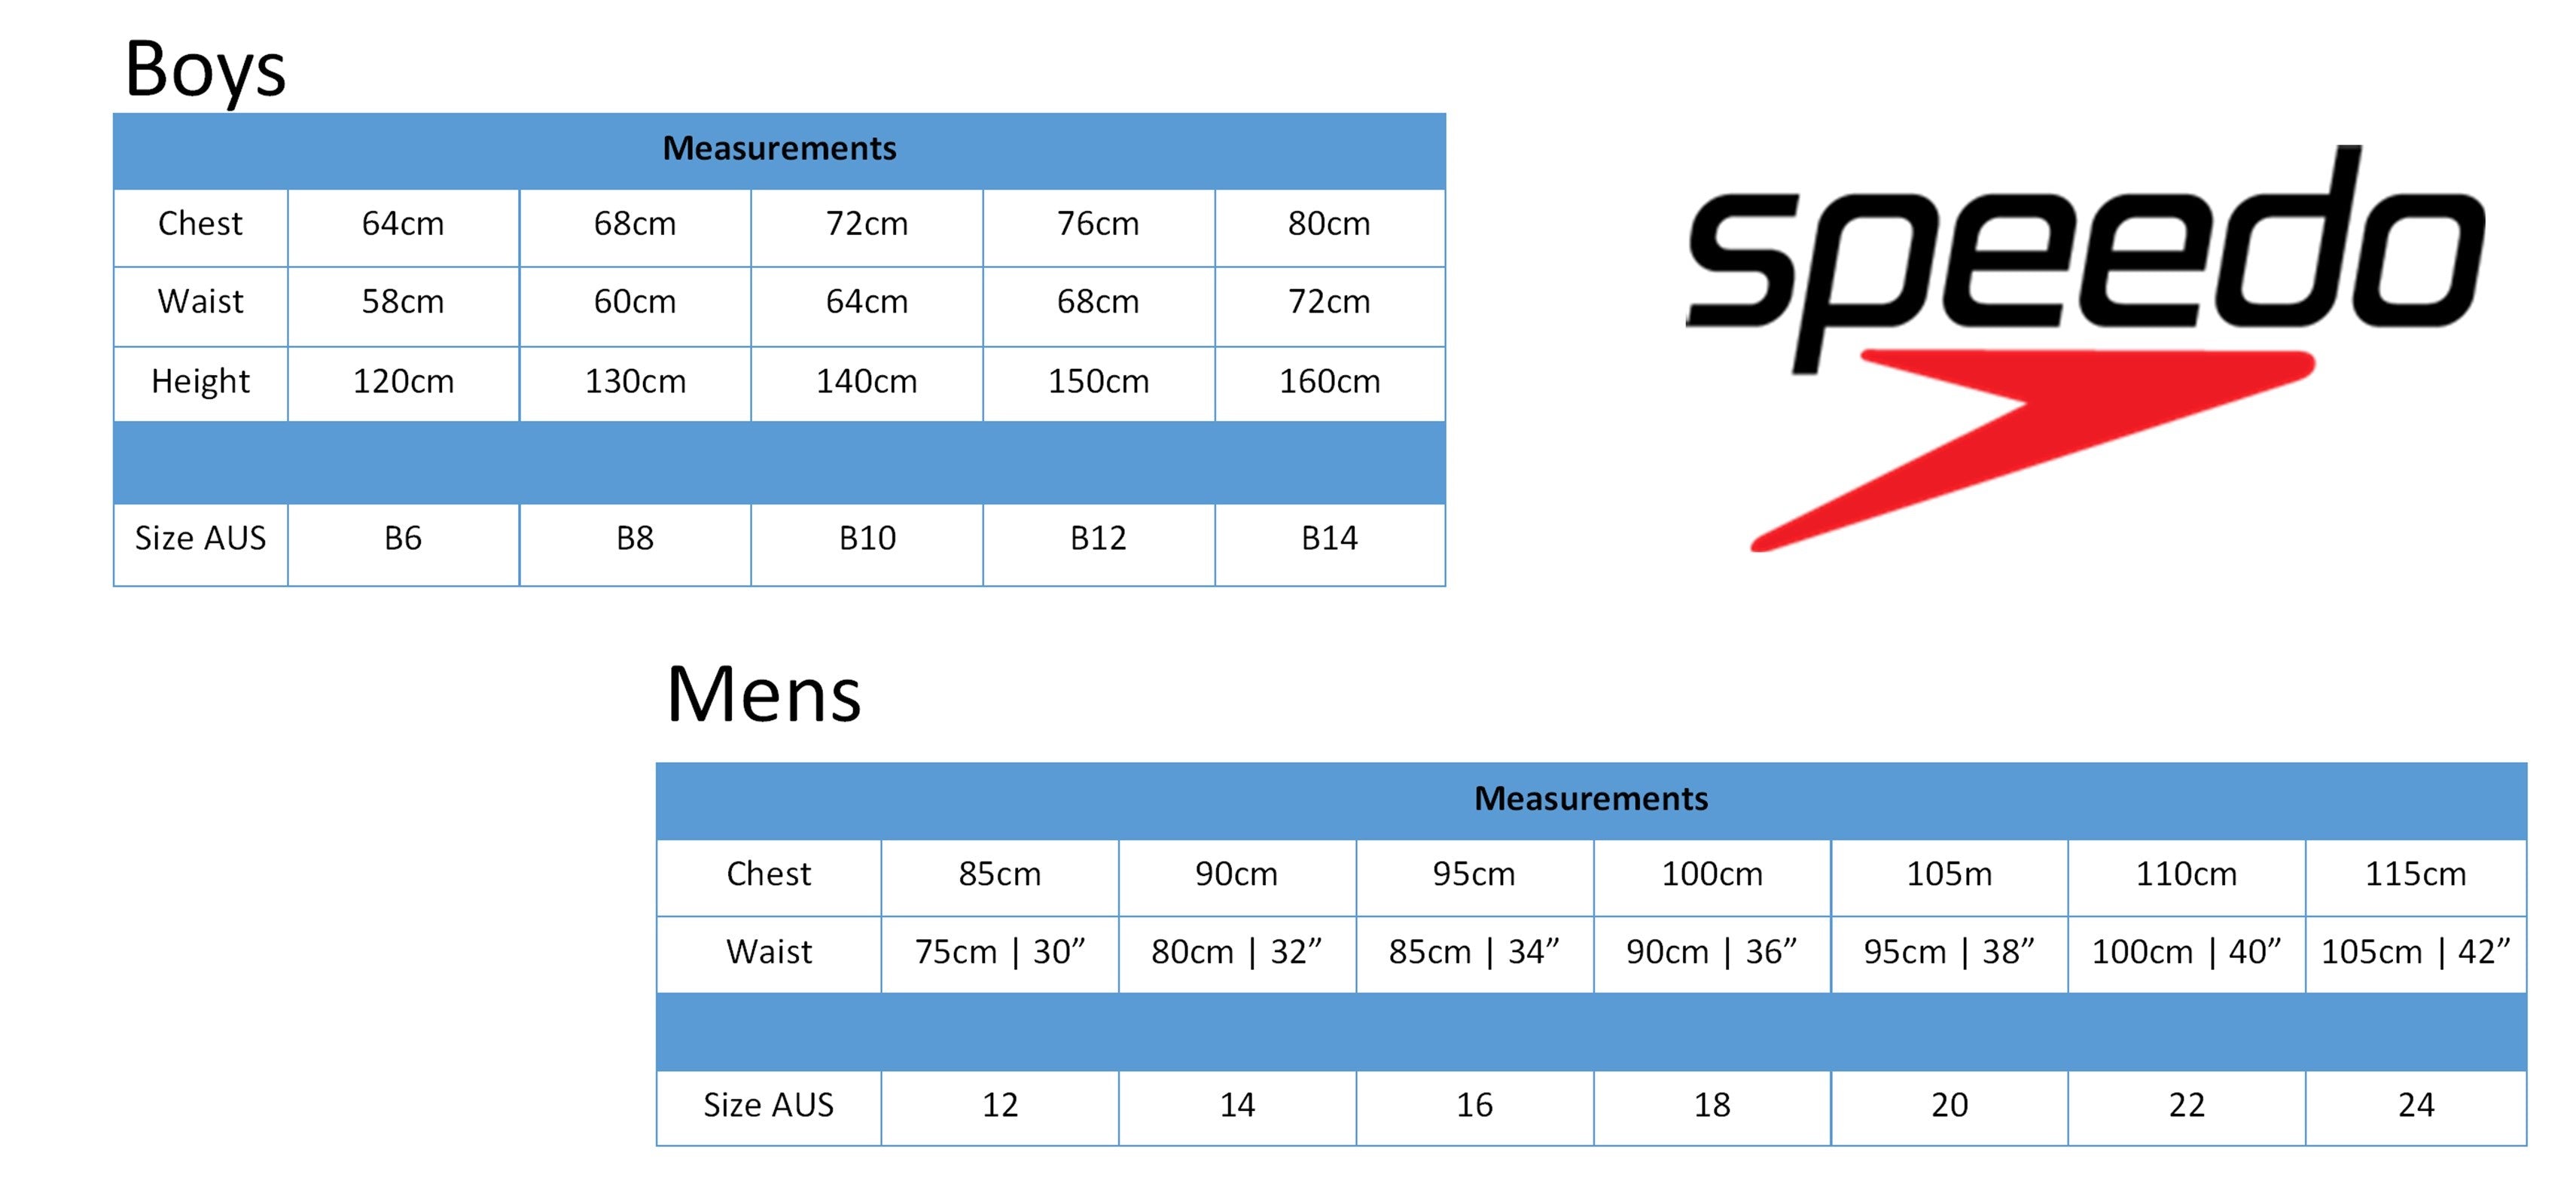 swimwear-sizing-guide-size-chart-for-women-men-kids-speedo-australia-eduaspirant